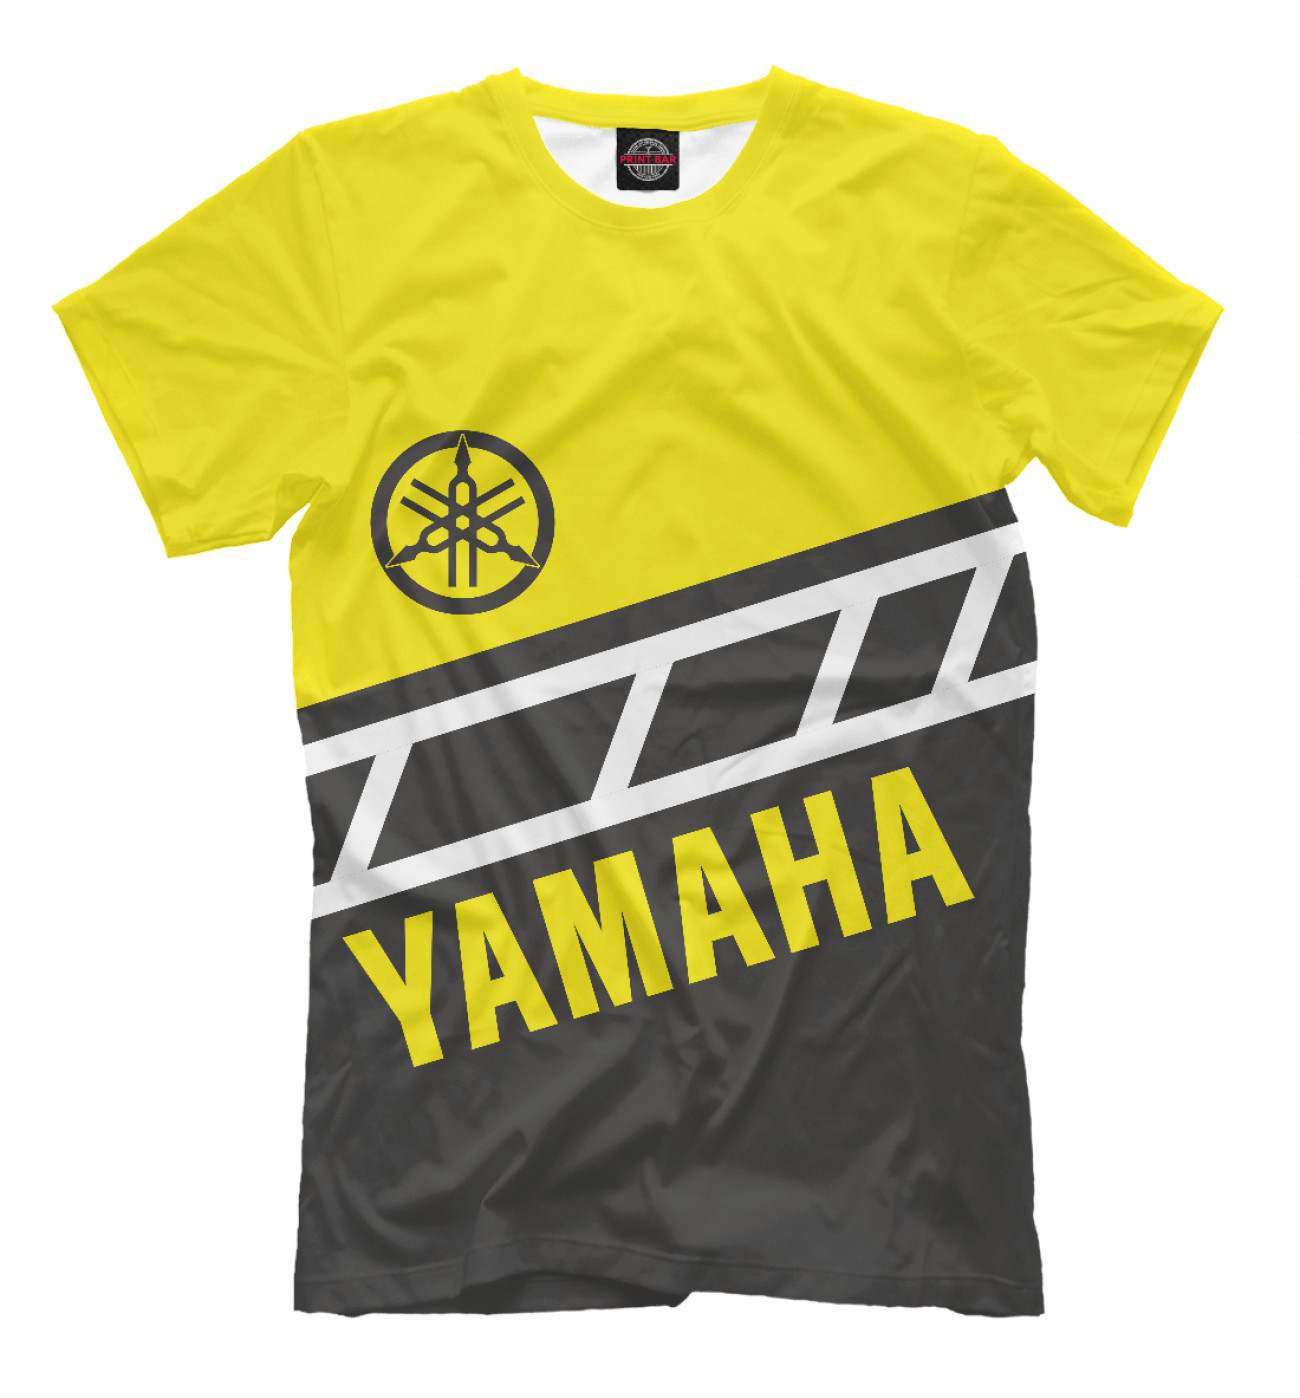 Мужская Футболка Yamaha, артикул: YAM-690377-fut-2